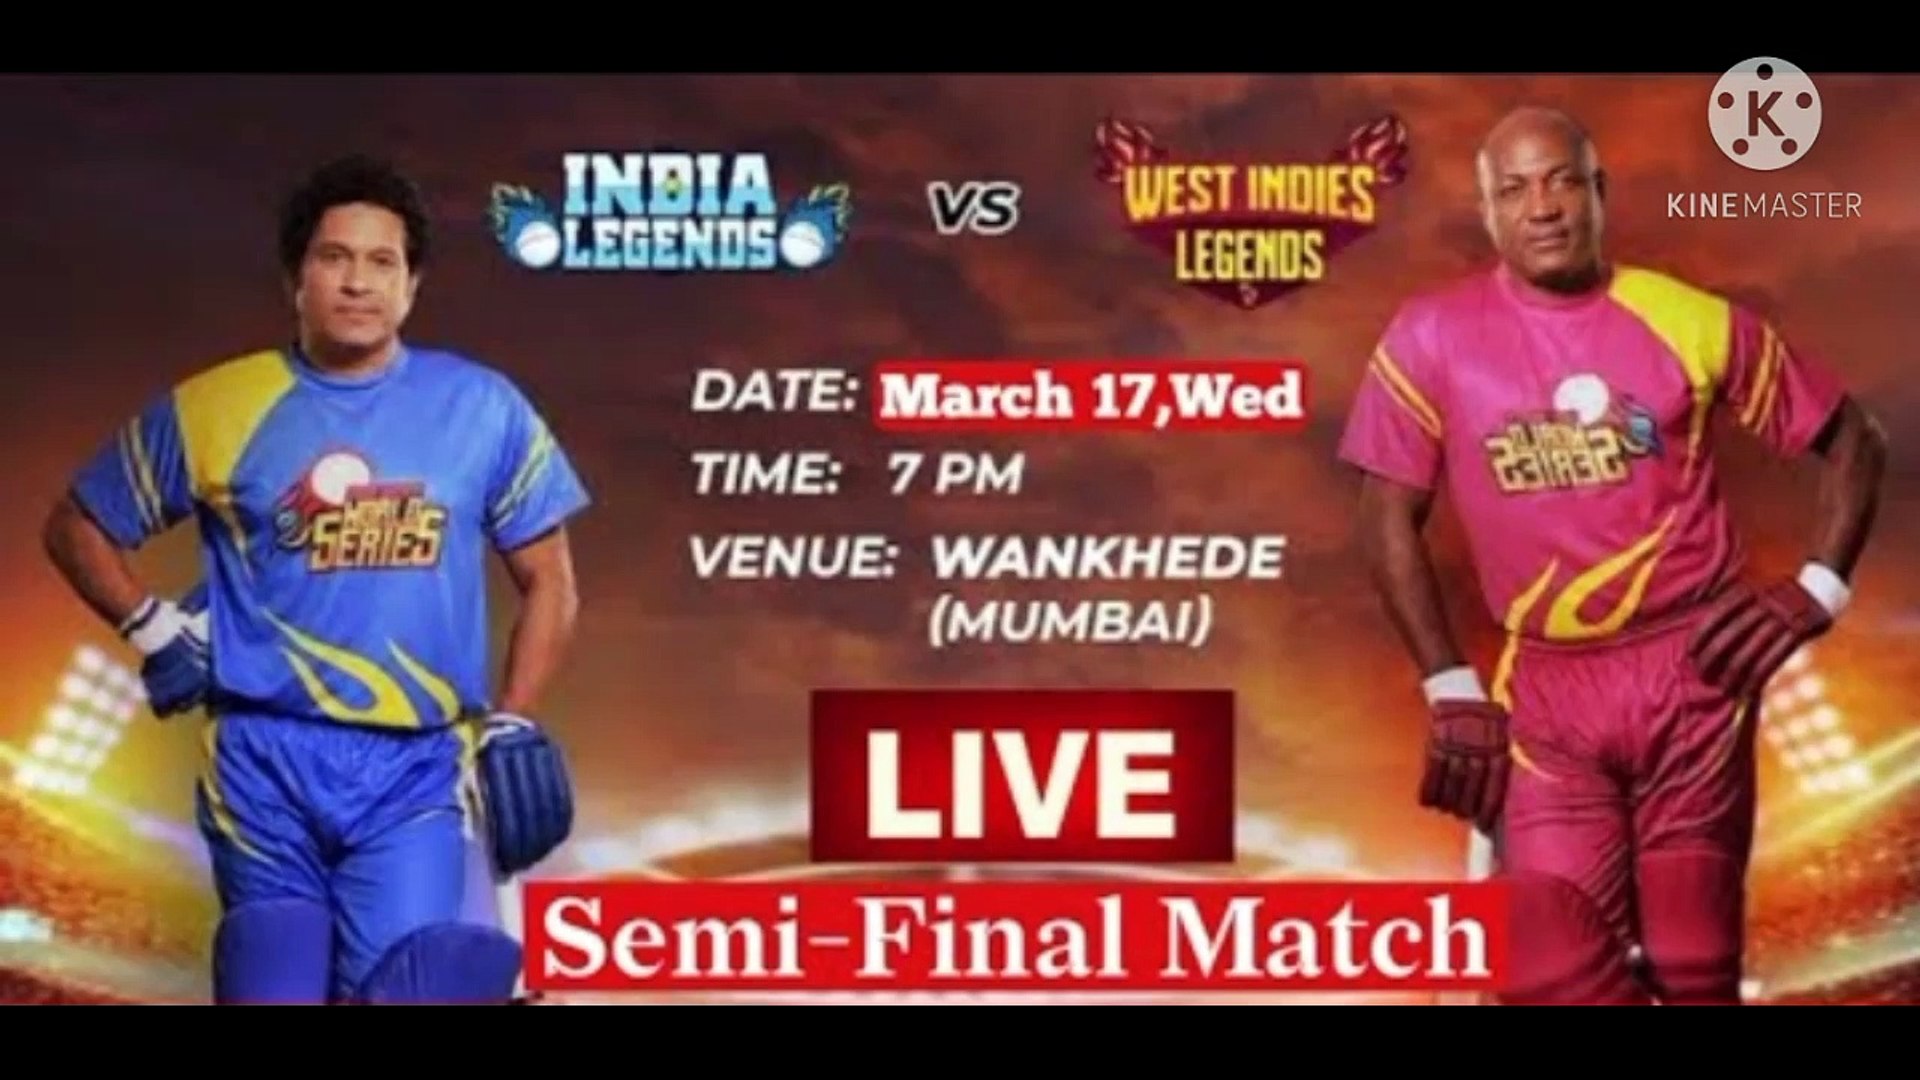 India Legends vs West indies Legendssemi-finalRoad Road safety world series.